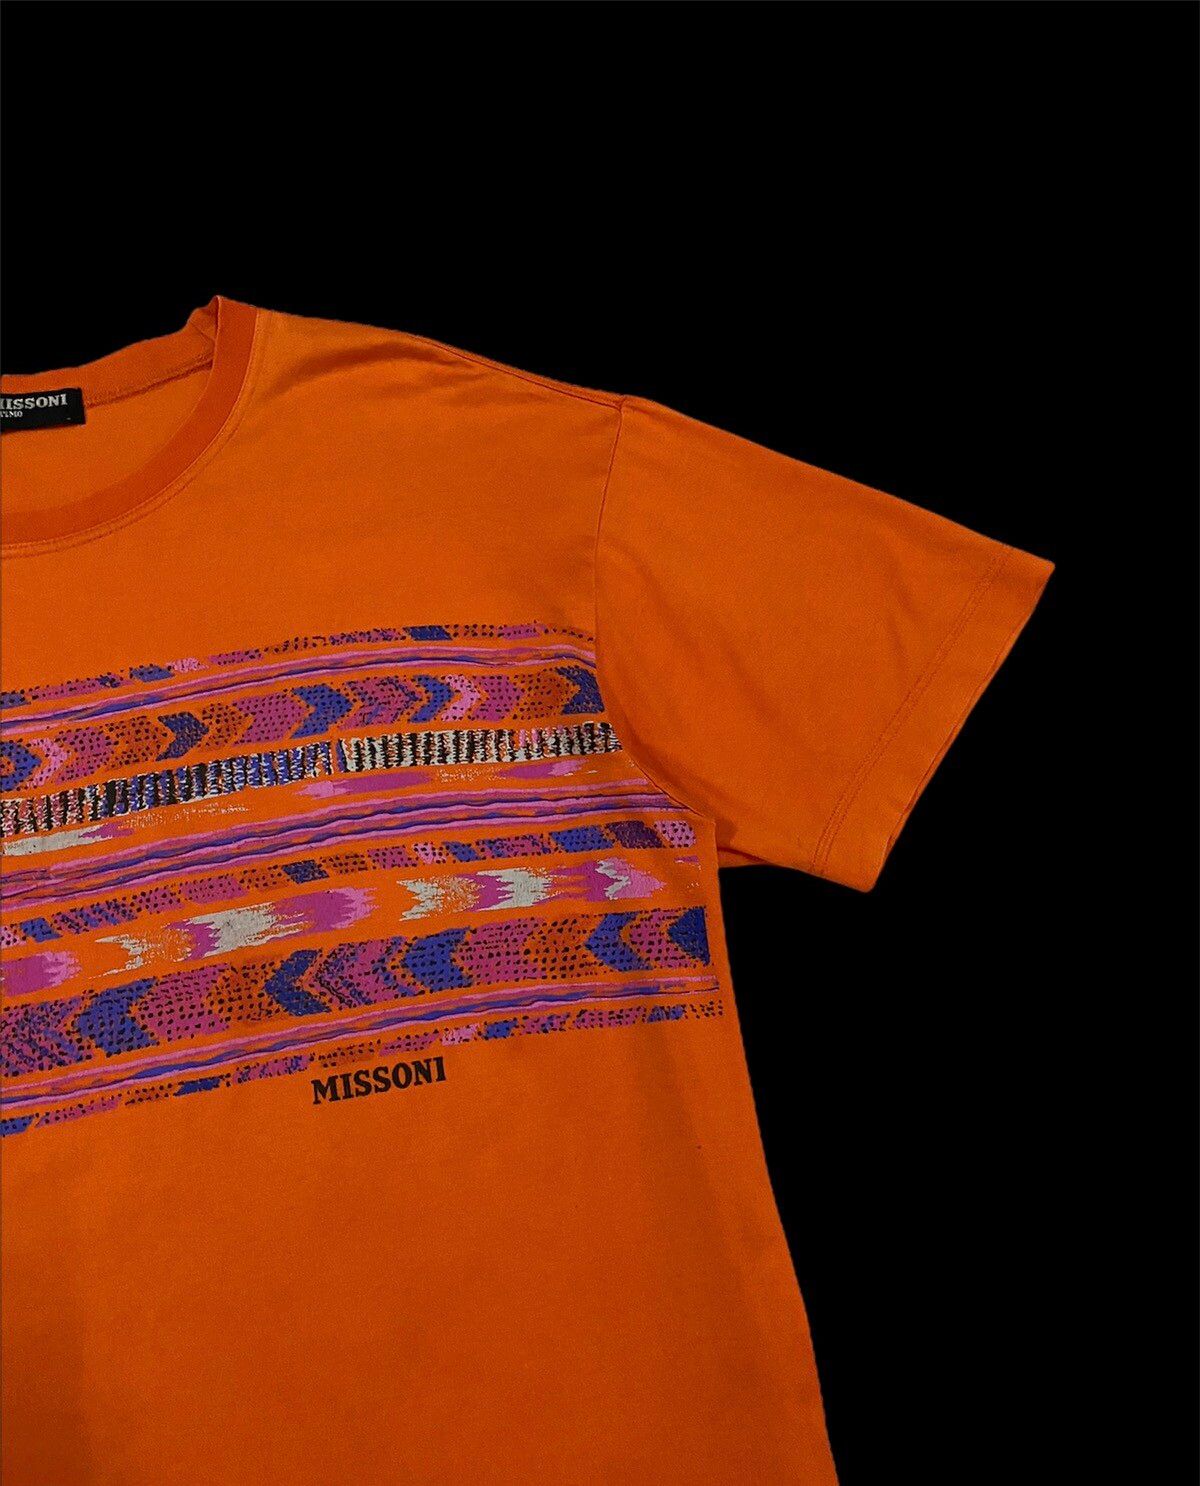 Missoni Intimo🍊➡️ Arrow Printed Colorful Orange Tee - 6